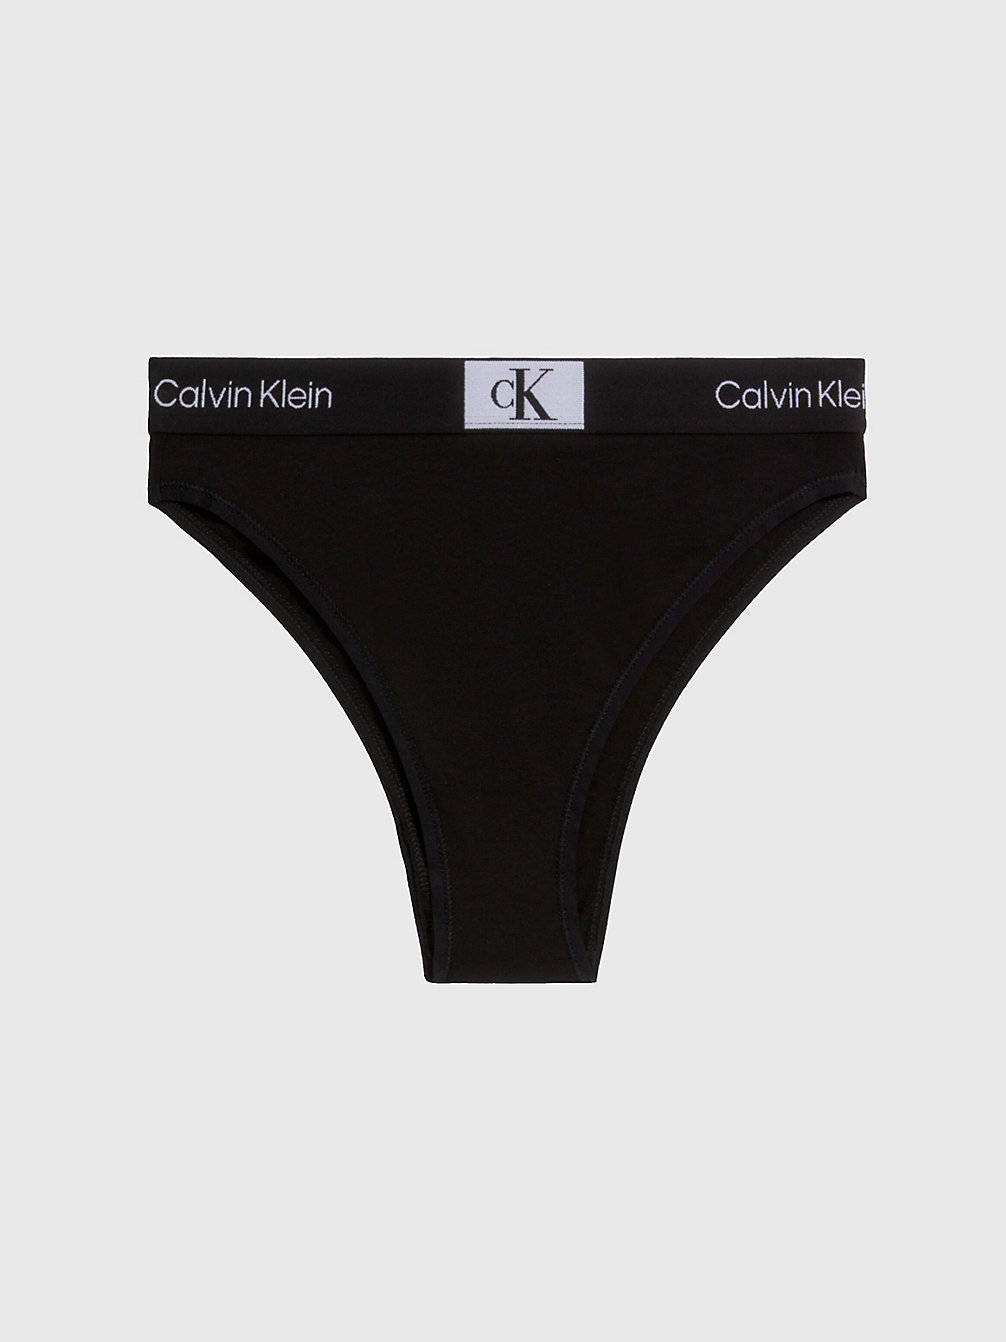 BLACK High Waisted Brazilian Briefs - Ck96 undefined women Calvin Klein